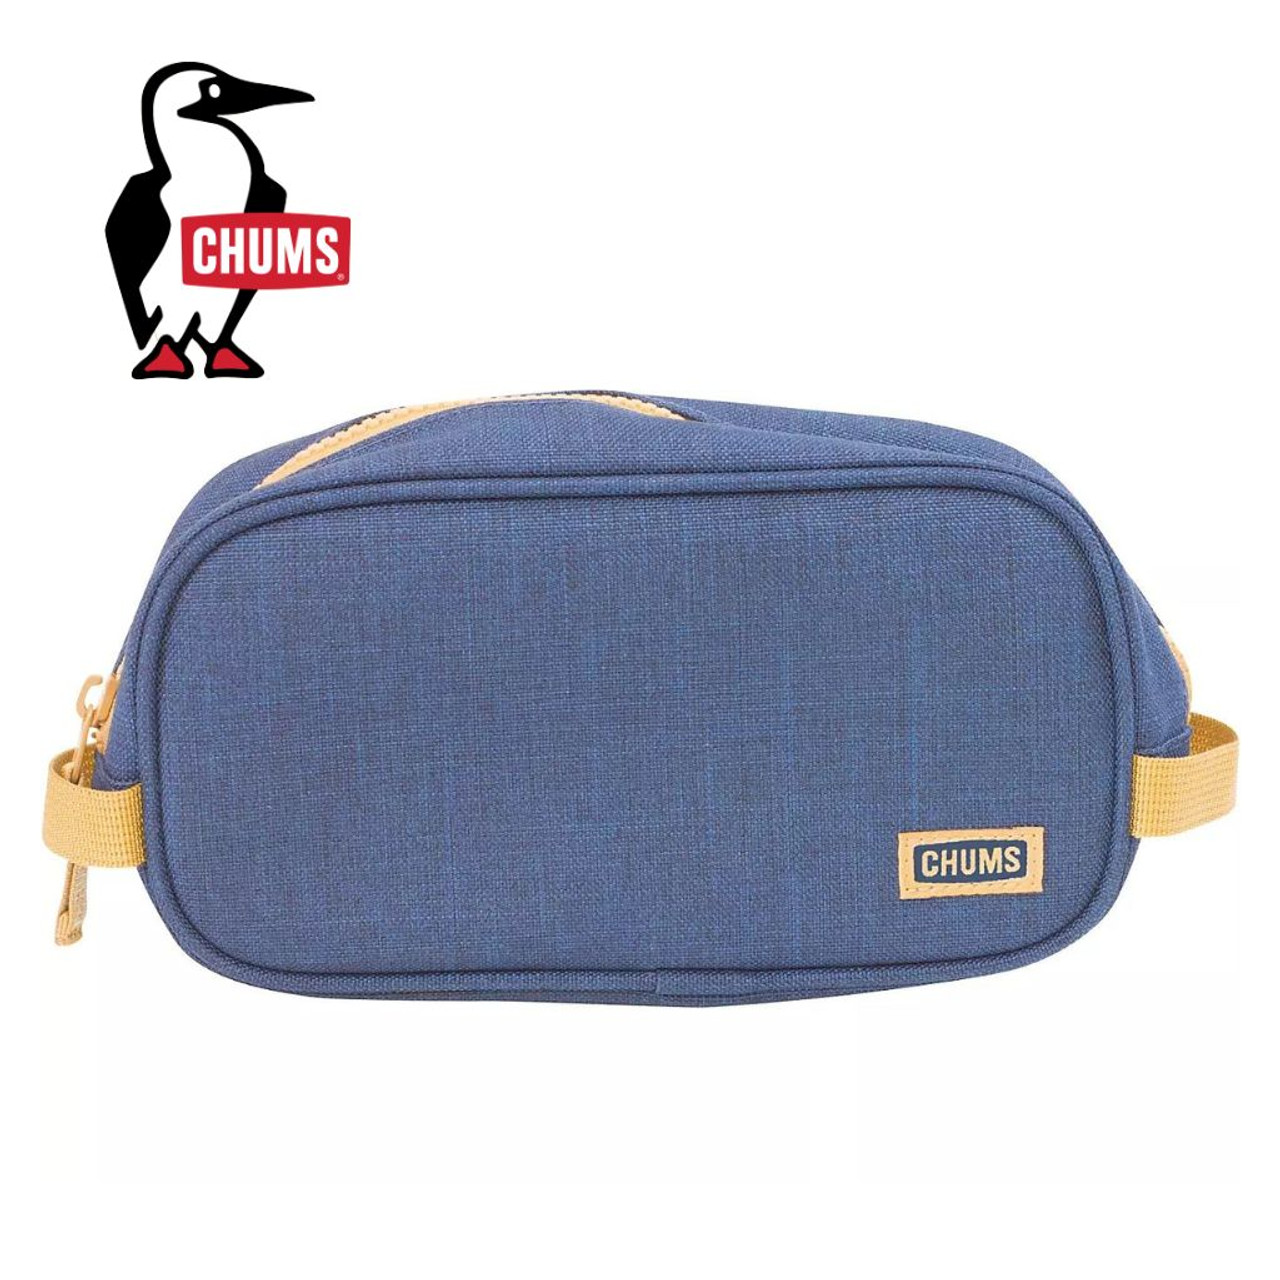 Chums® Weekender Medium Dopp Kit Toiletry Bag product image